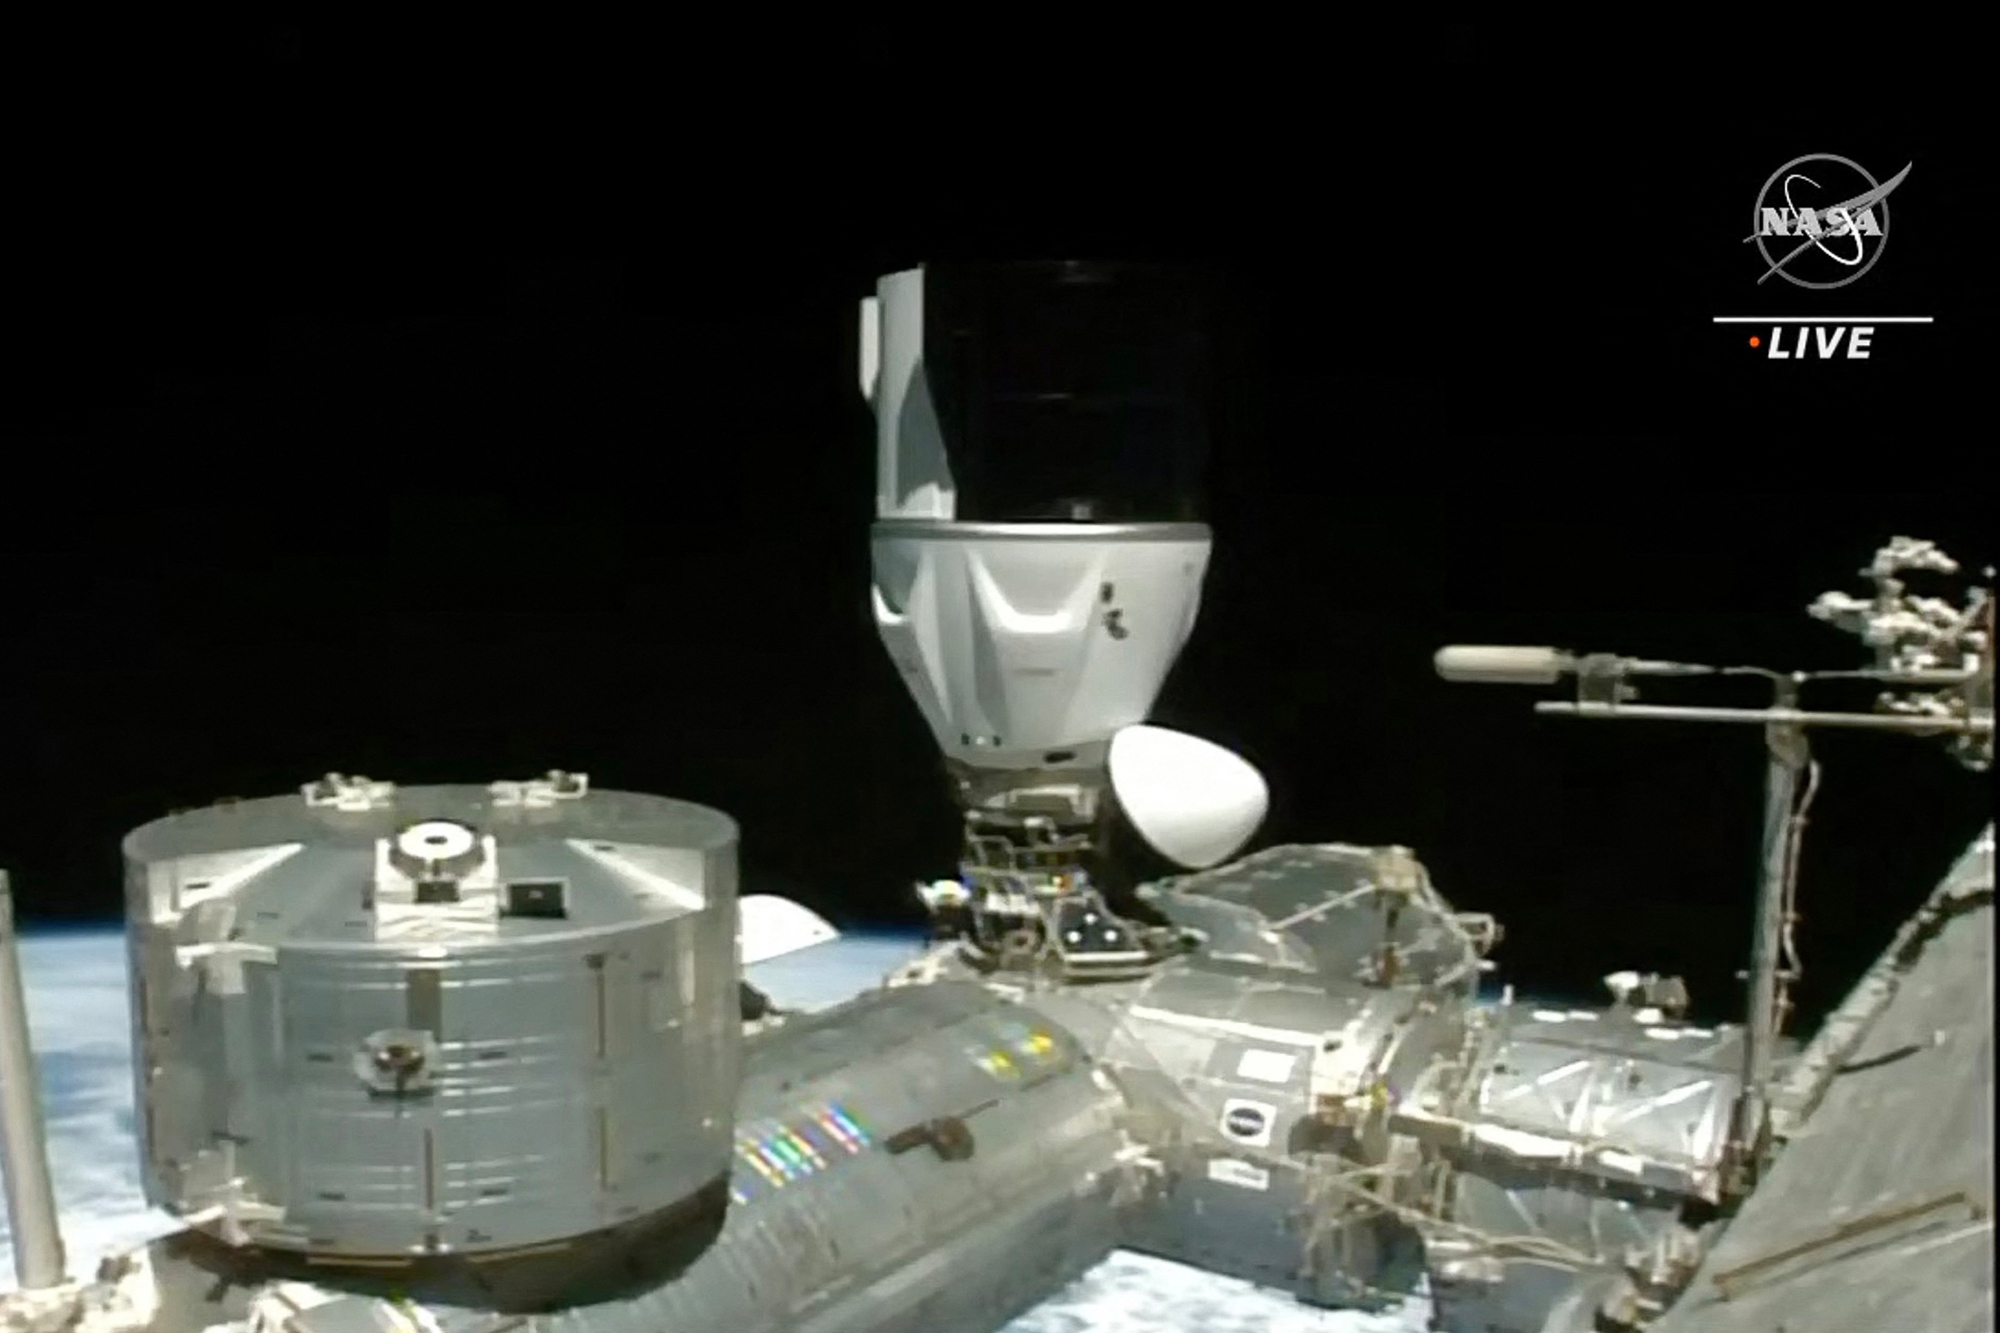 Die Dragon Crew-6-Kapsel dockte an der Internationalen Raumstation an (Bild: Nasa TV/AFP)